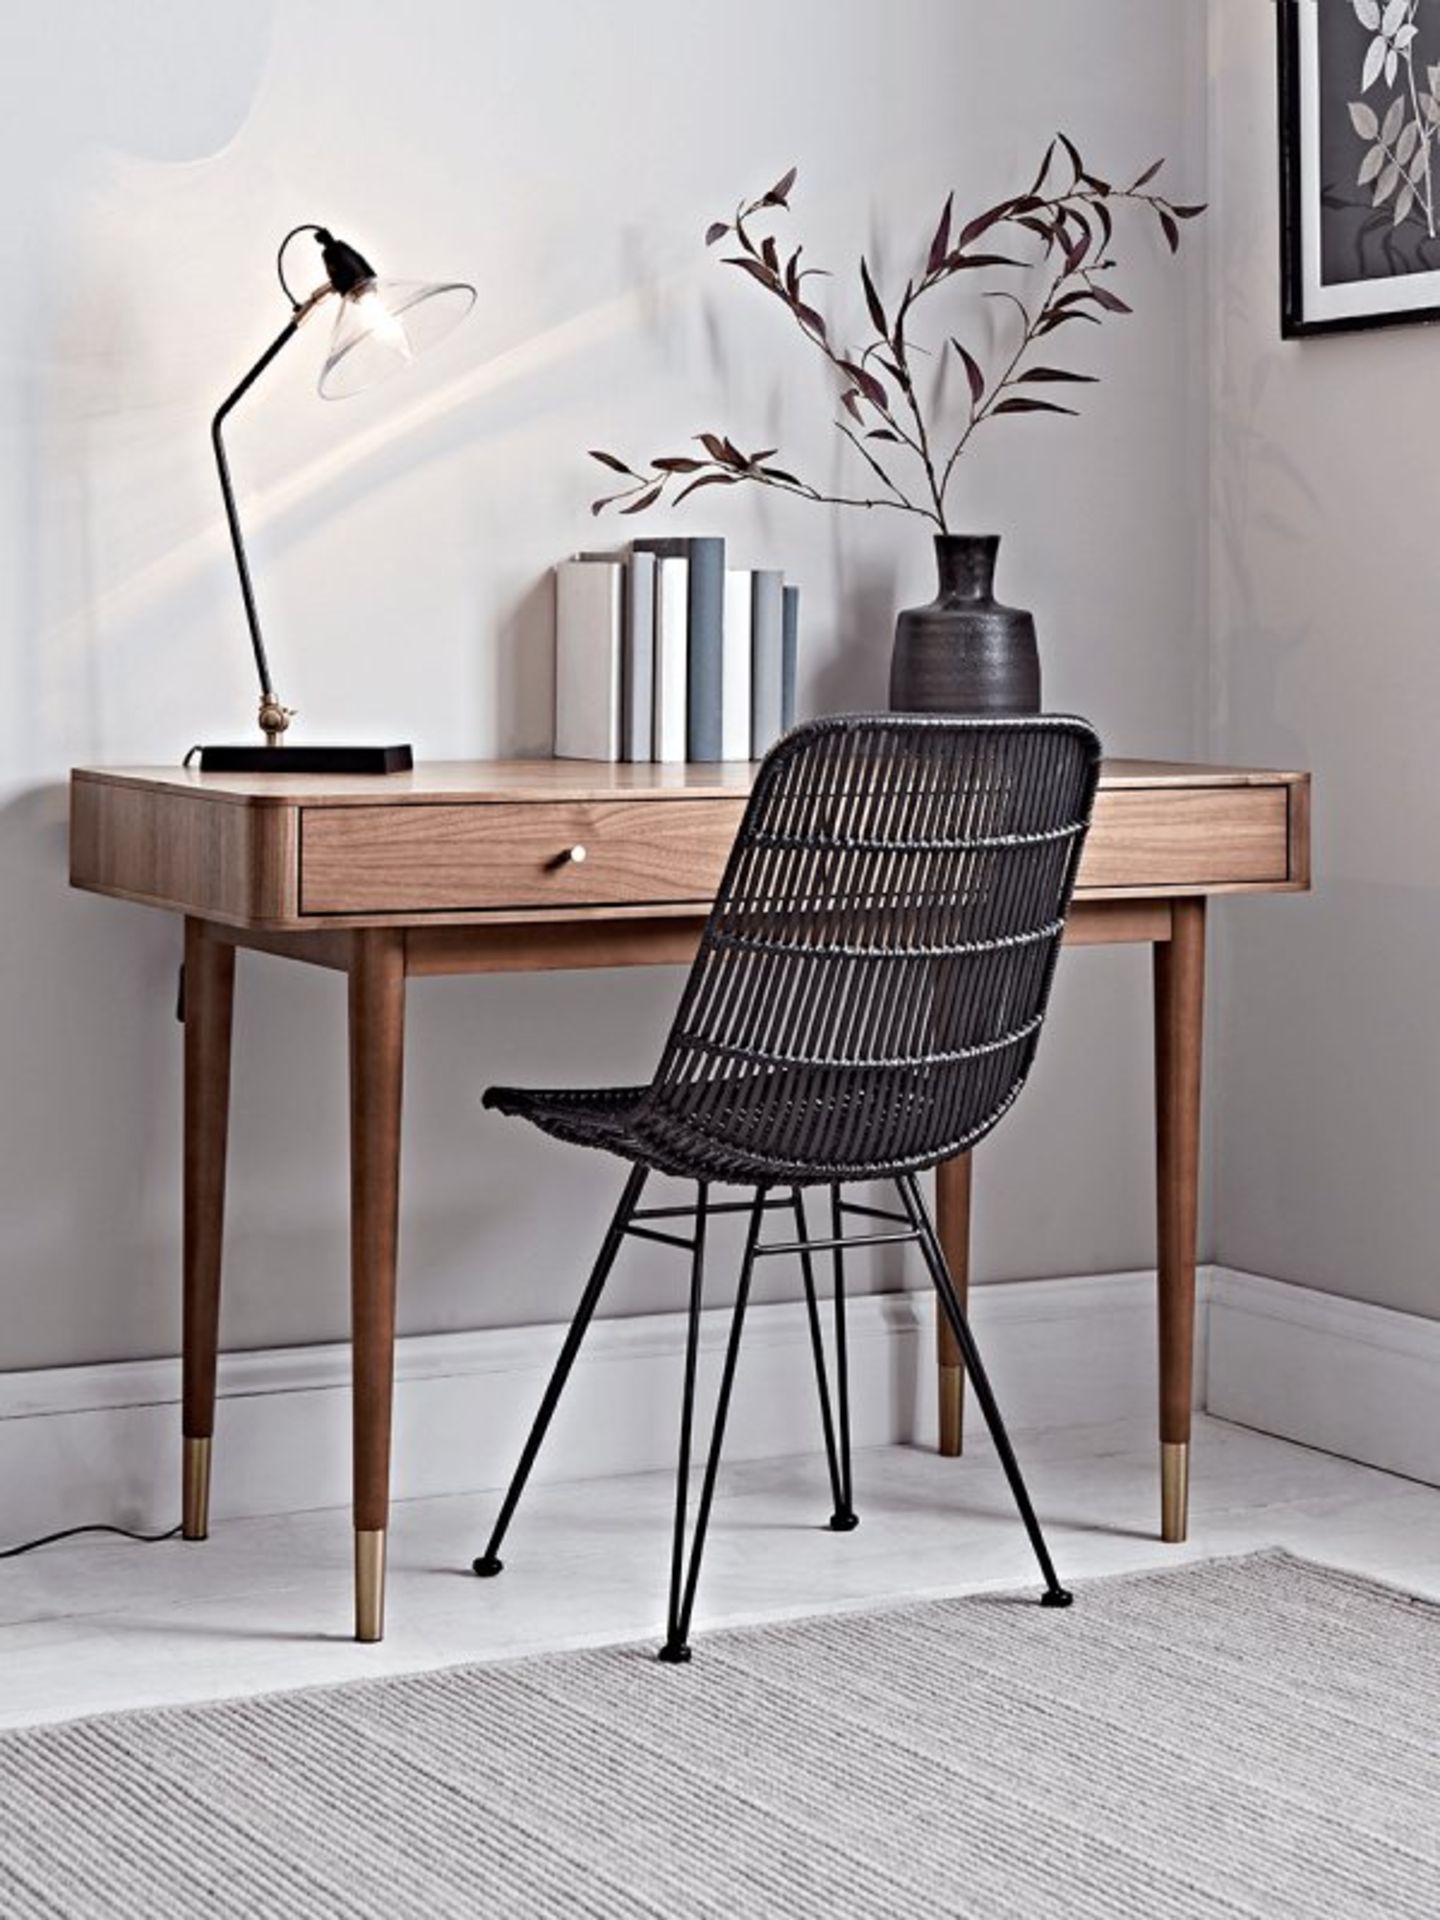 Mid Century Style Desk - RRP £725.00 (small dent bottom side of desk)